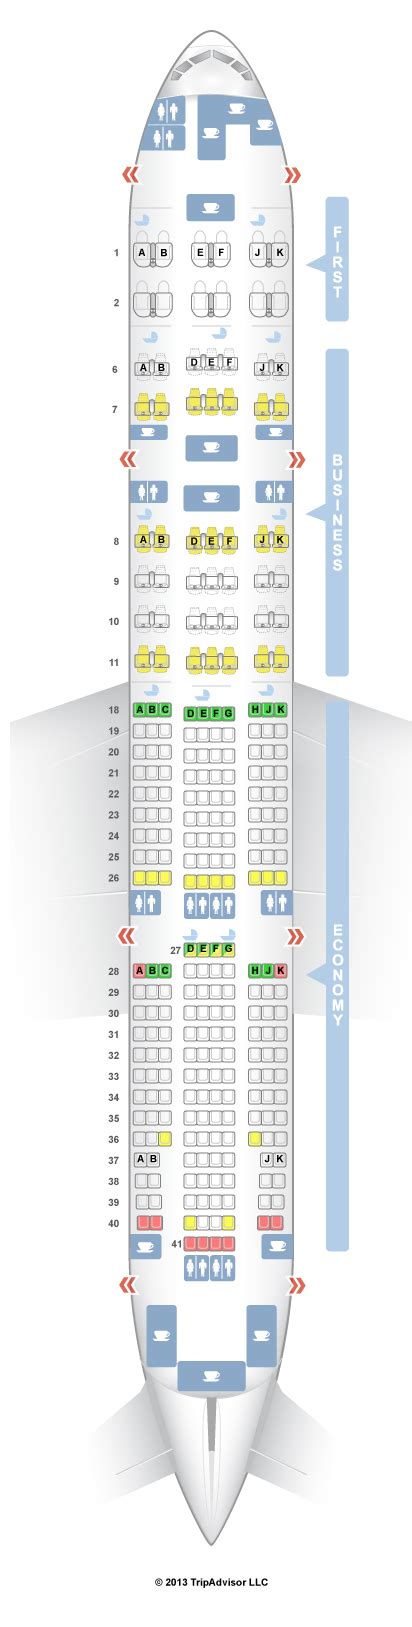 Boeing 777 300er Emirates Economy Seat Map Seat Review Sites Put